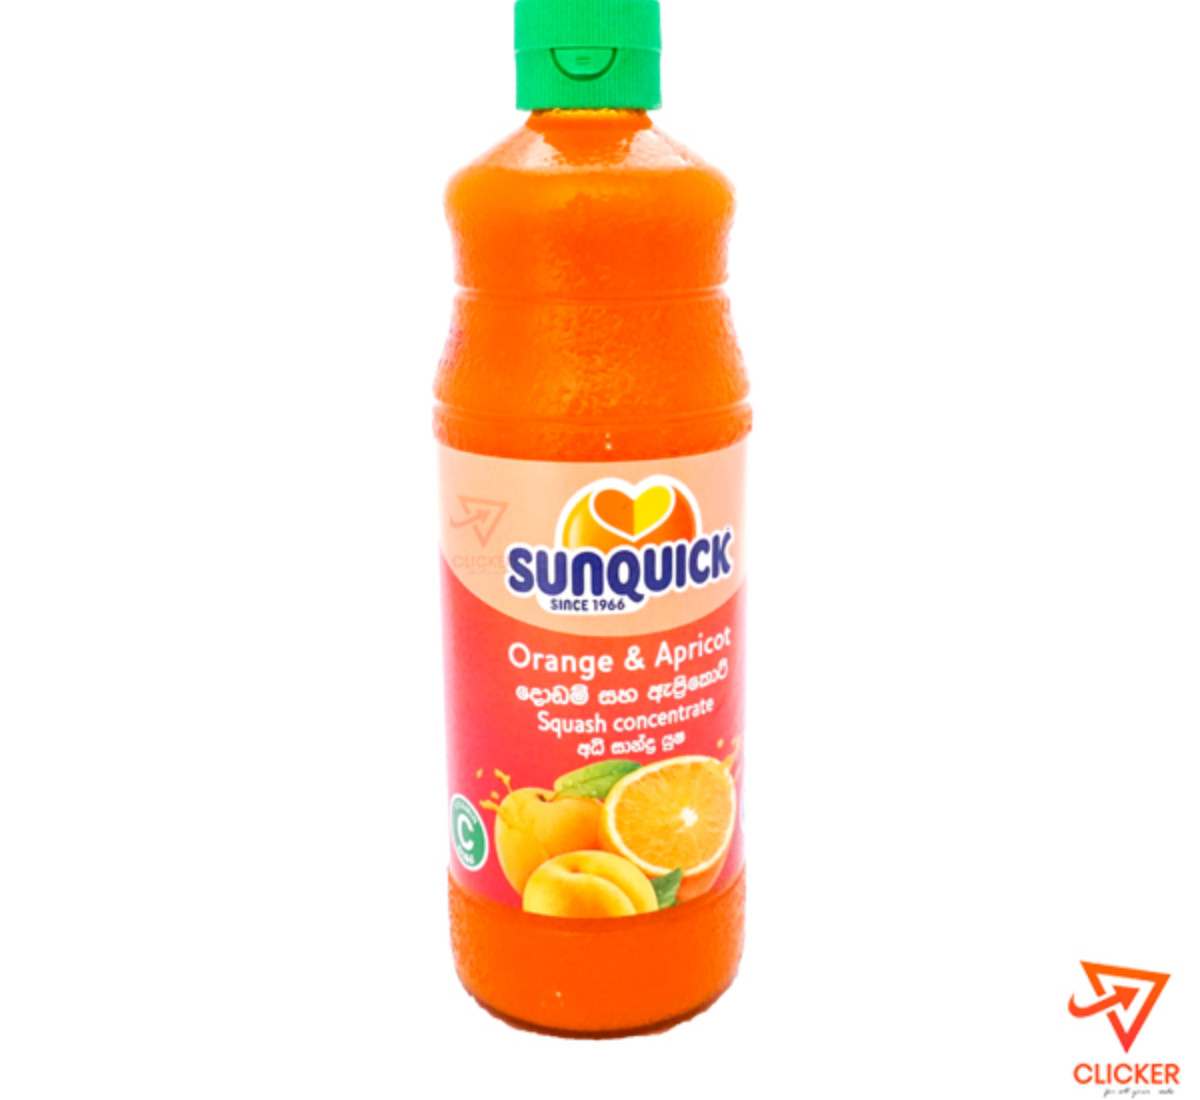 Clicker product 700ml SUNQUICK Orange and Apricot 1160